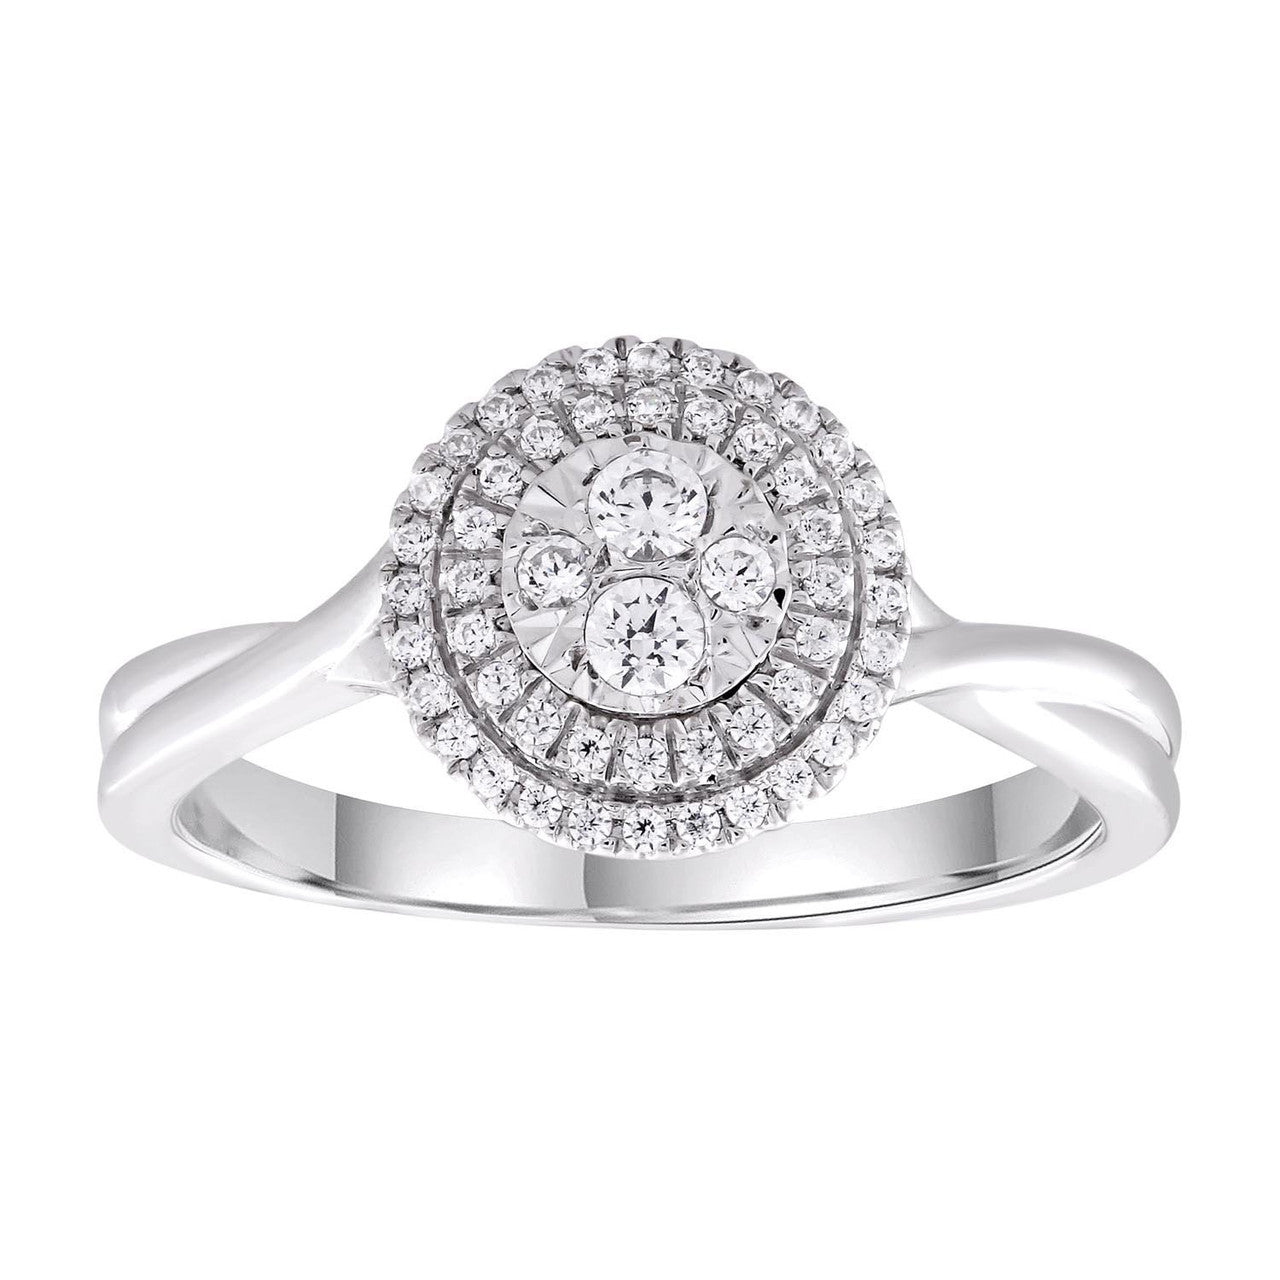 Ice Jewellery Ring with 0.25ct Diamonds in 9K White Gold -  R-40061-025-W | Ice Jewellery Australia